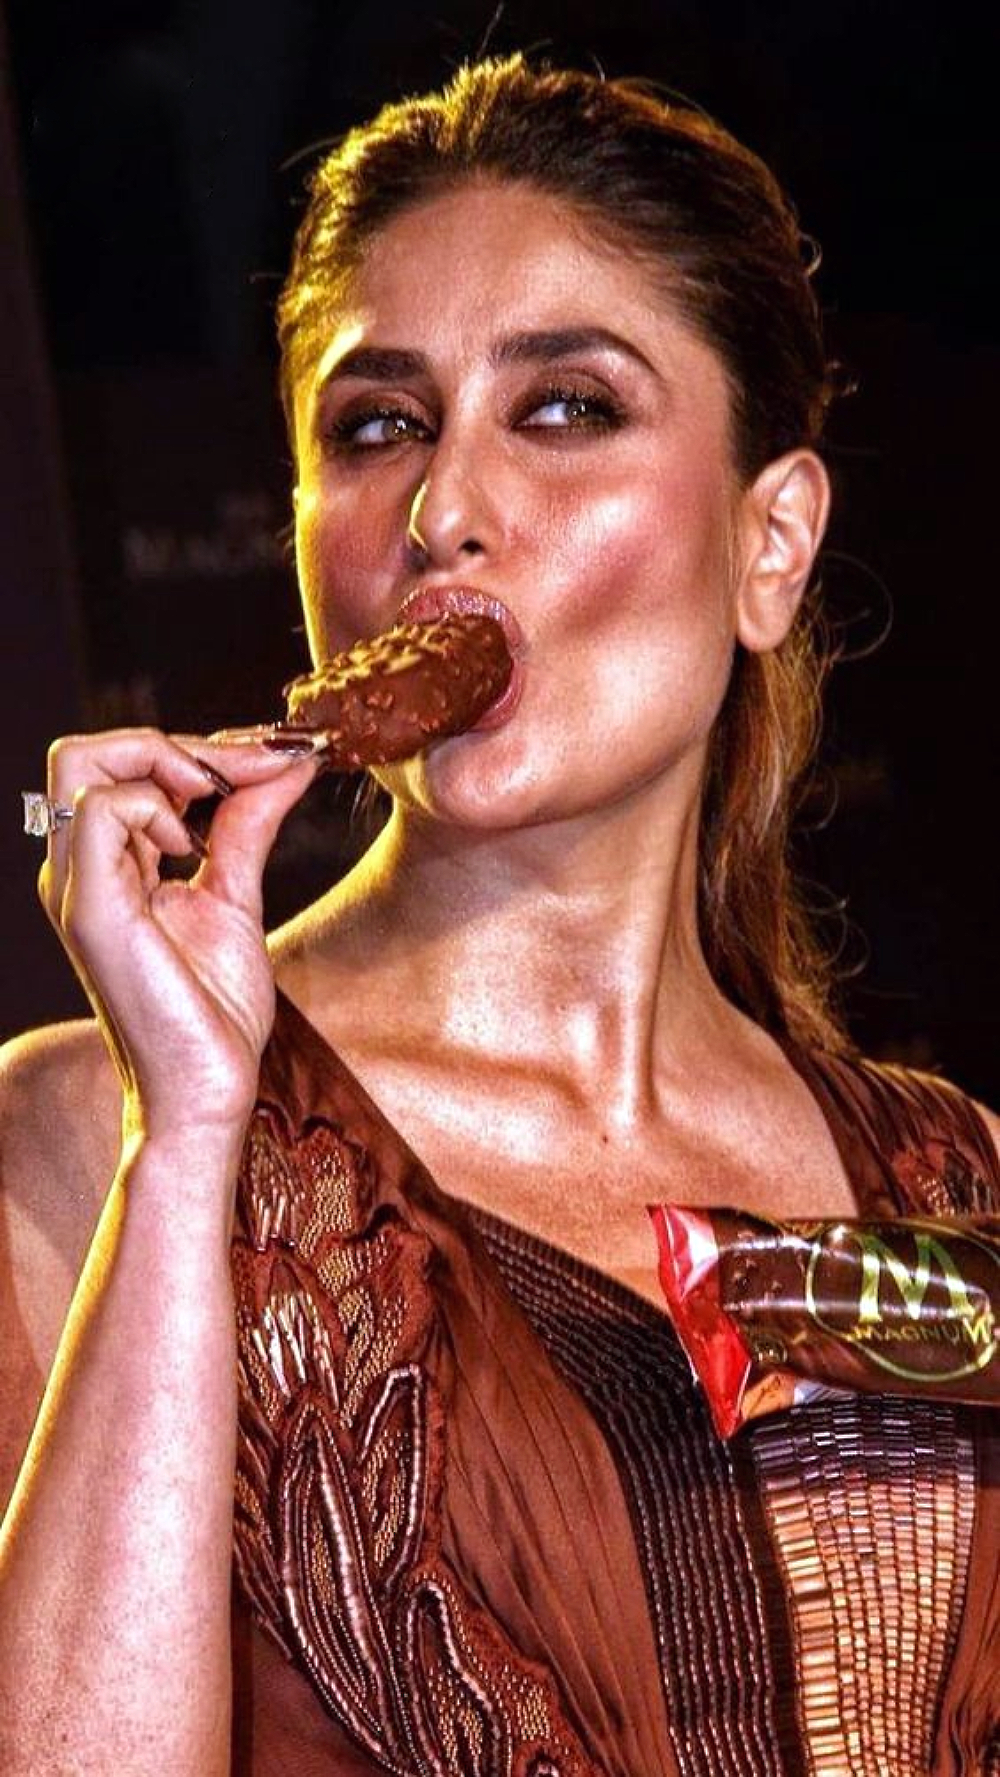 [hot] Kareena Kapoor Absolutely Enjoying Her Magnum Ice Cream Hd Stills And